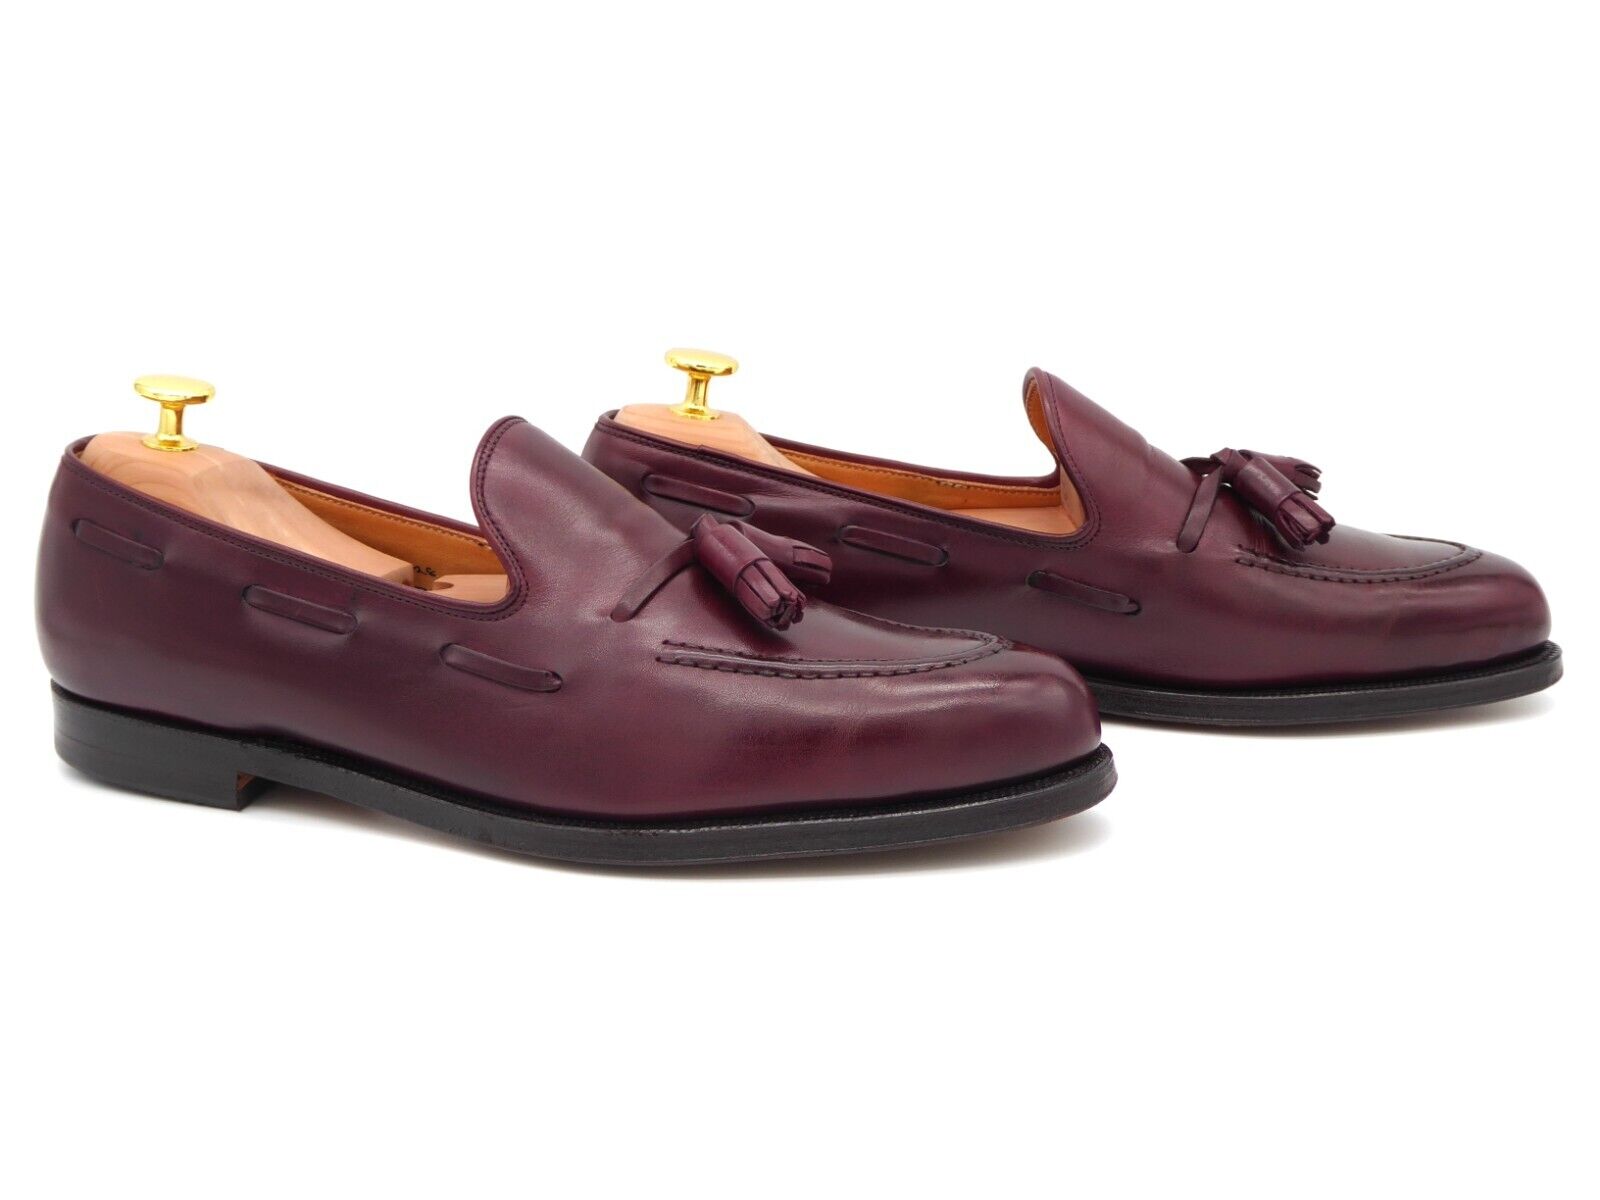 Image of UK 10 AA - Ed Meier by Crockett & Jones Burgundy Calf Tassel Loafers Shoes